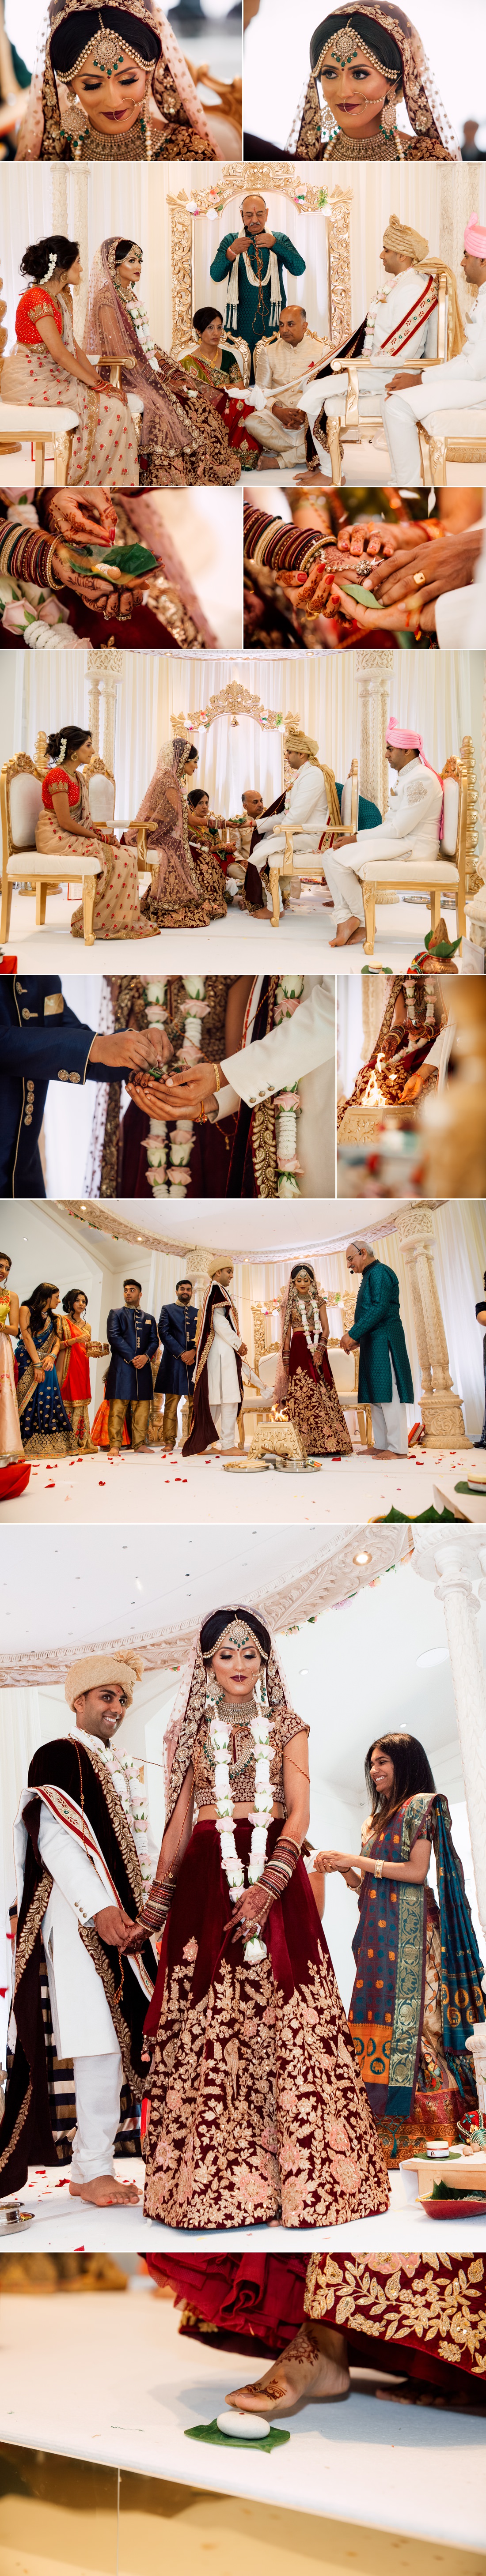 winstanley house - indian wedding photo 6